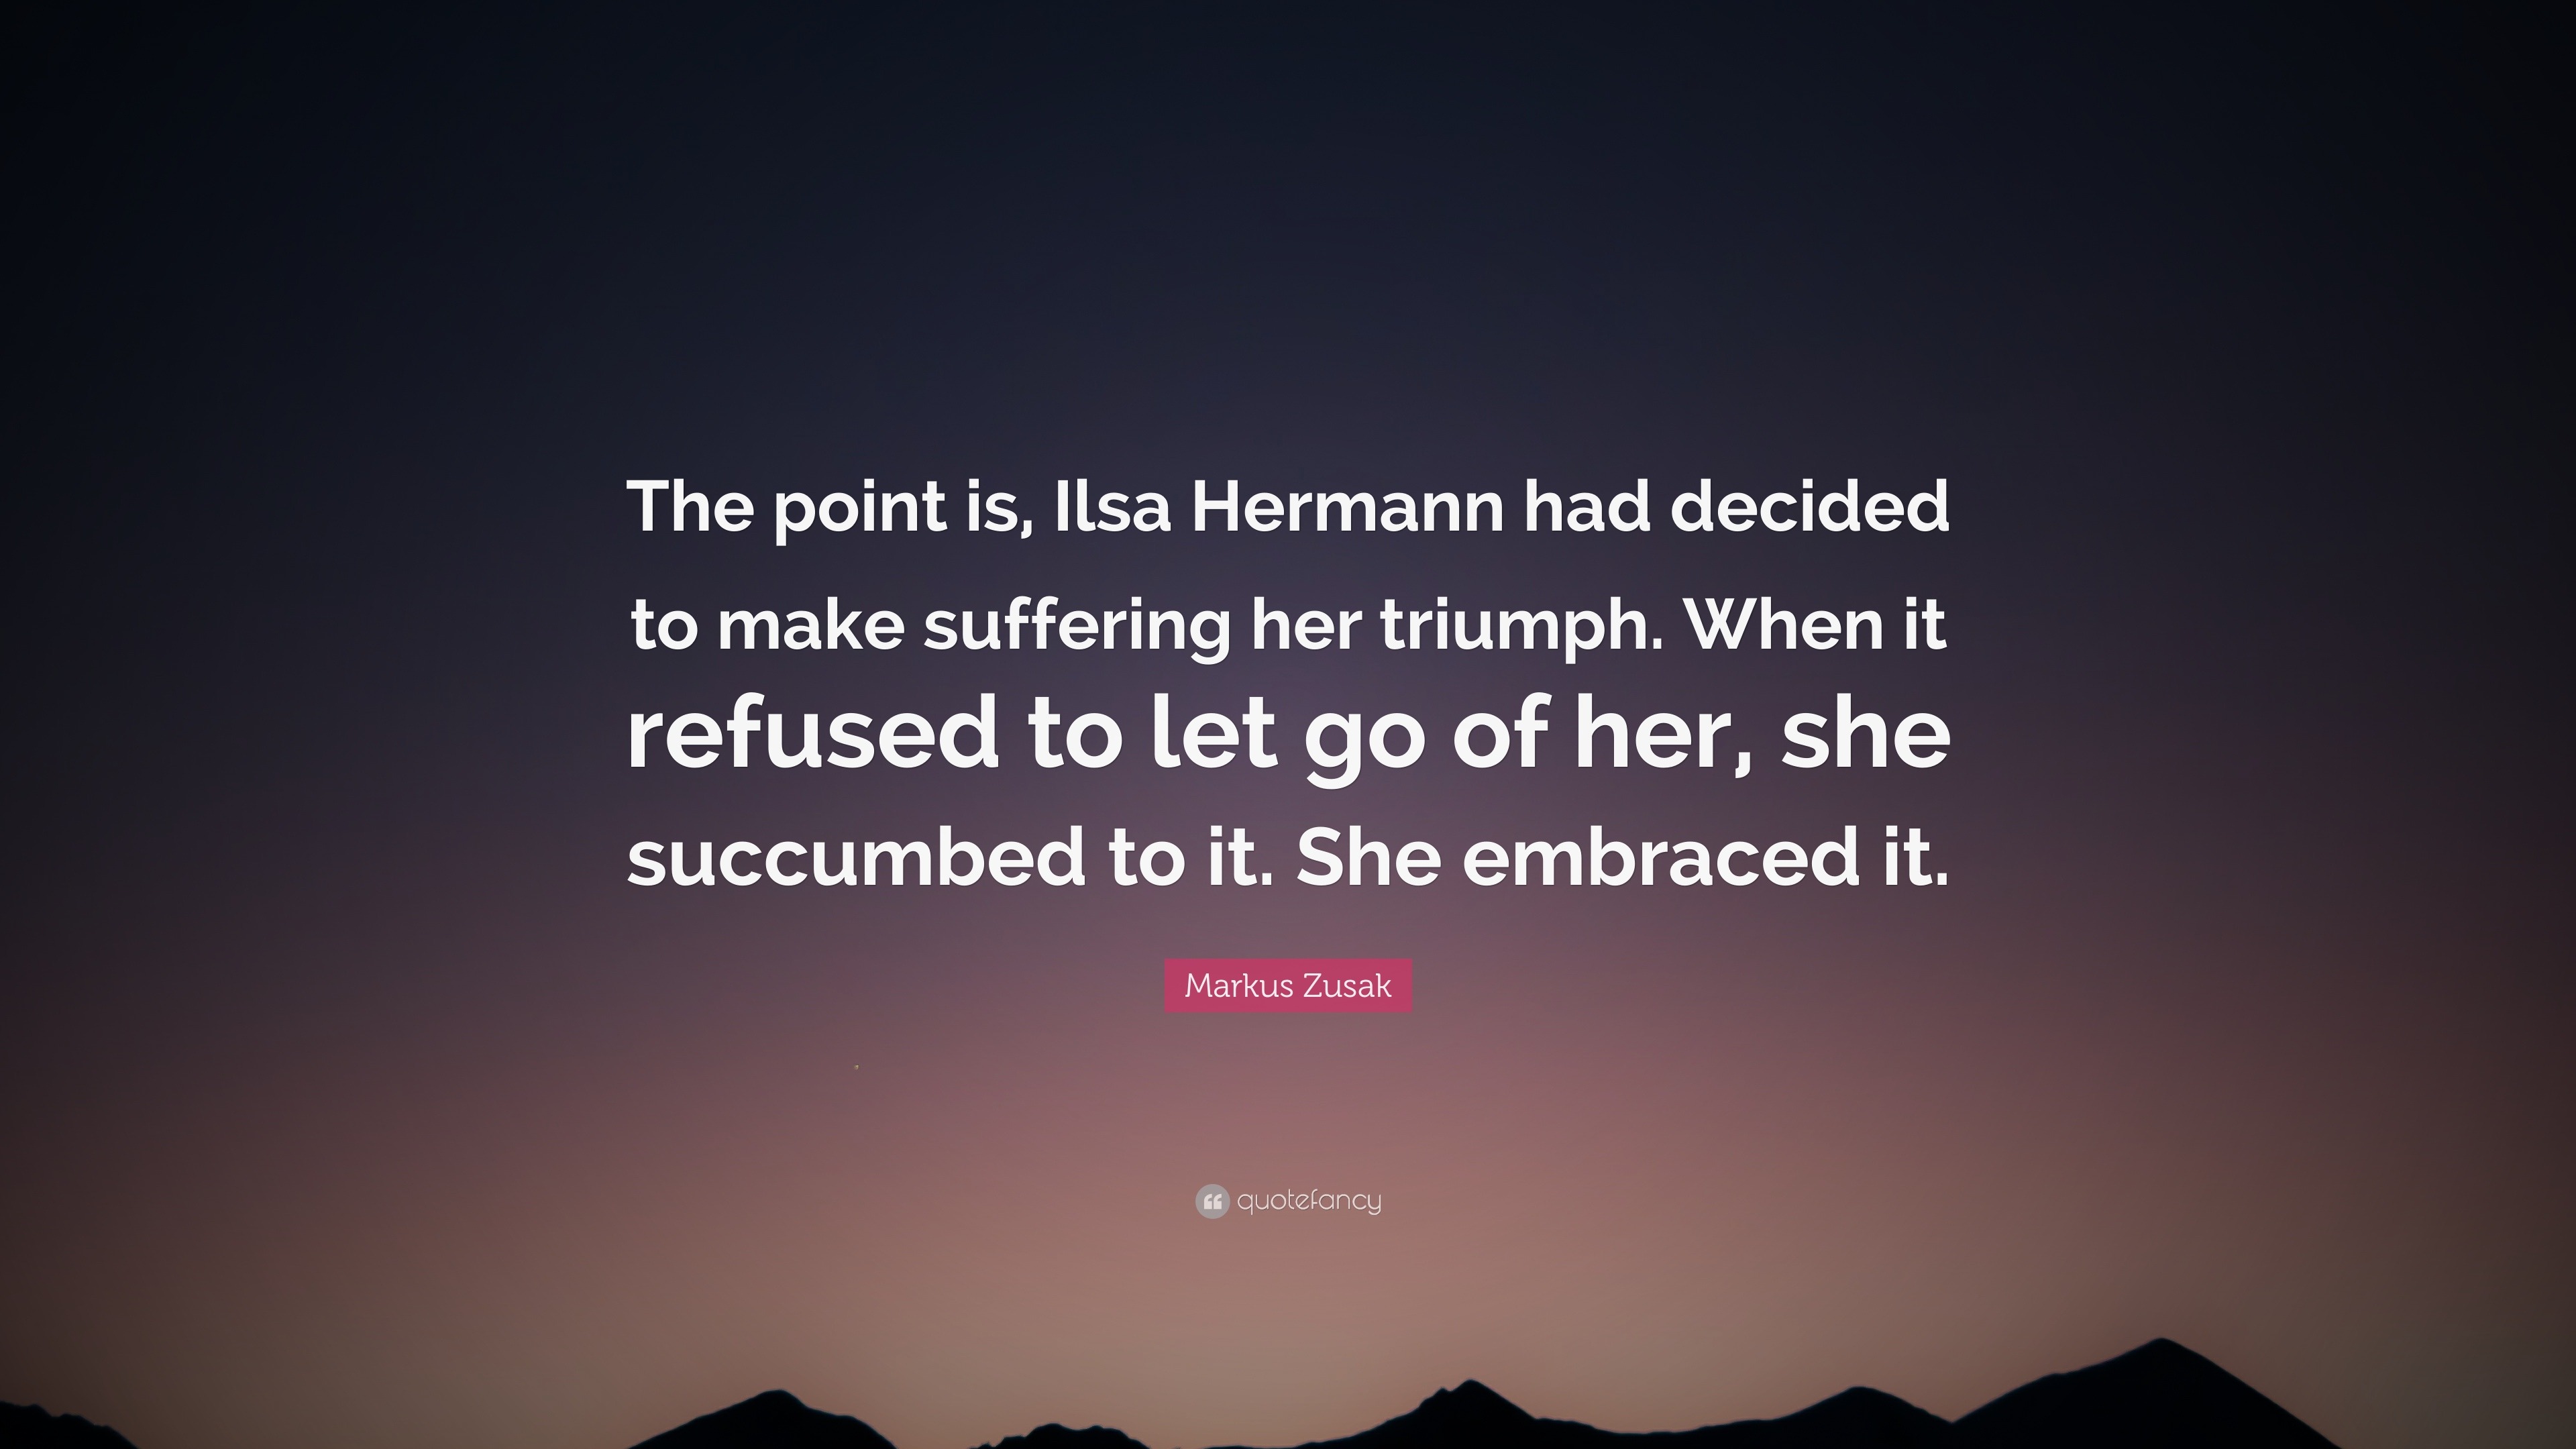 Markus Zusak Quote: “The point is, Ilsa Hermann had decided to make ...